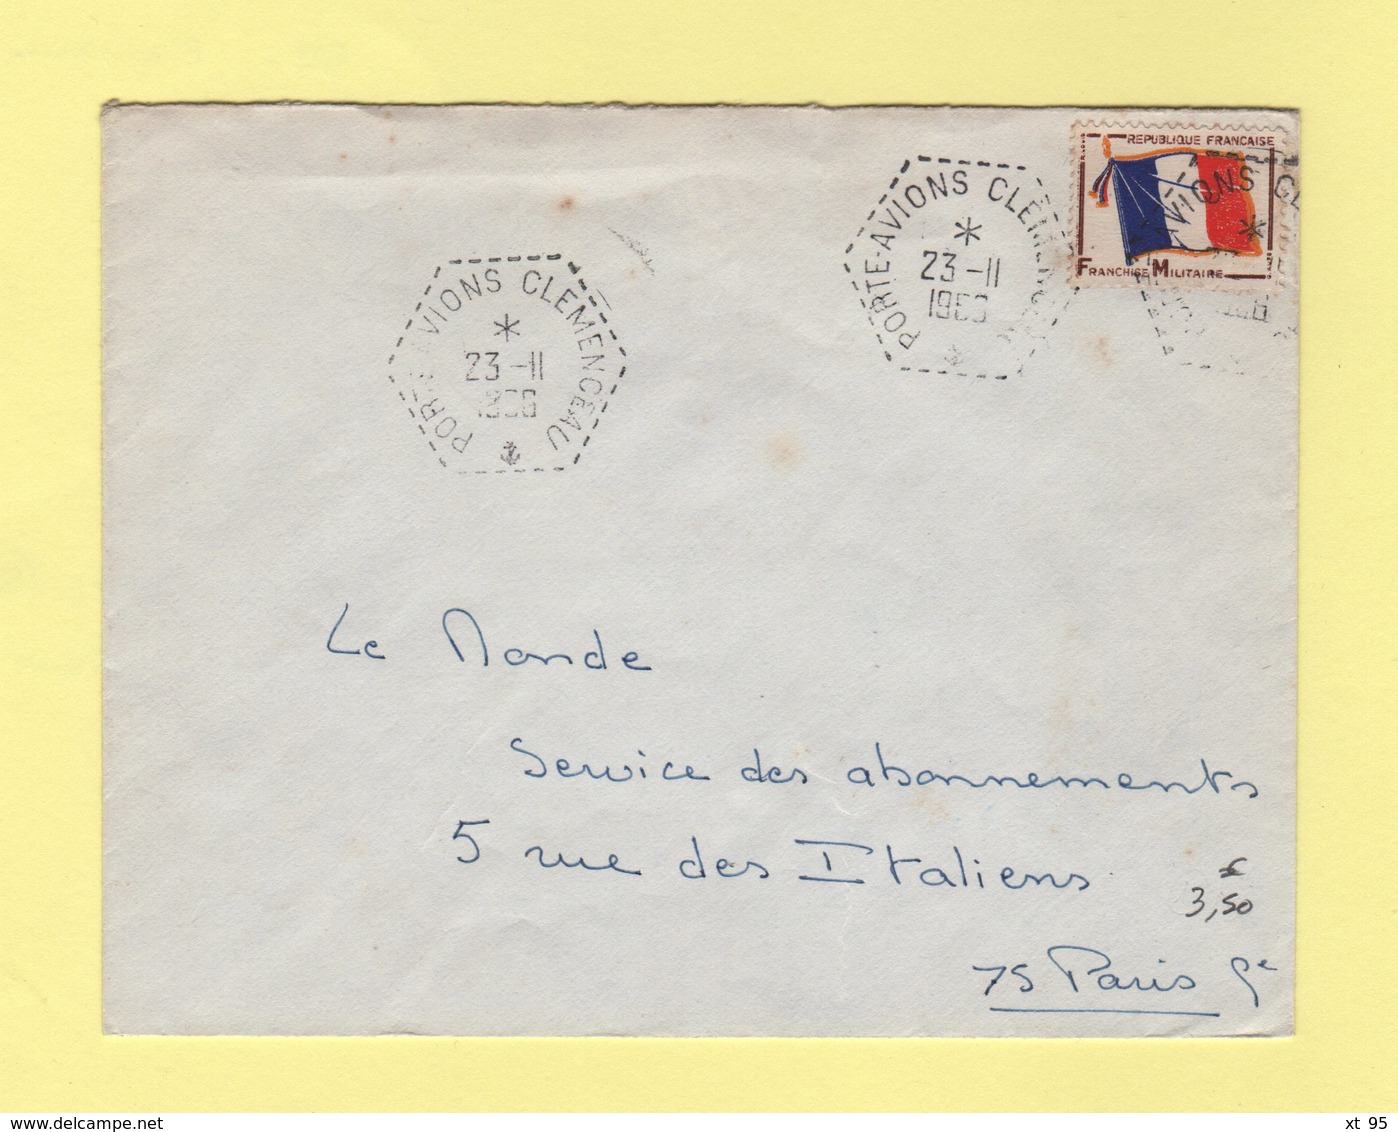 Poste Navale - Porte Avion Clemenceau - 23-11-1966 - Timbre FM - Posta Marittima